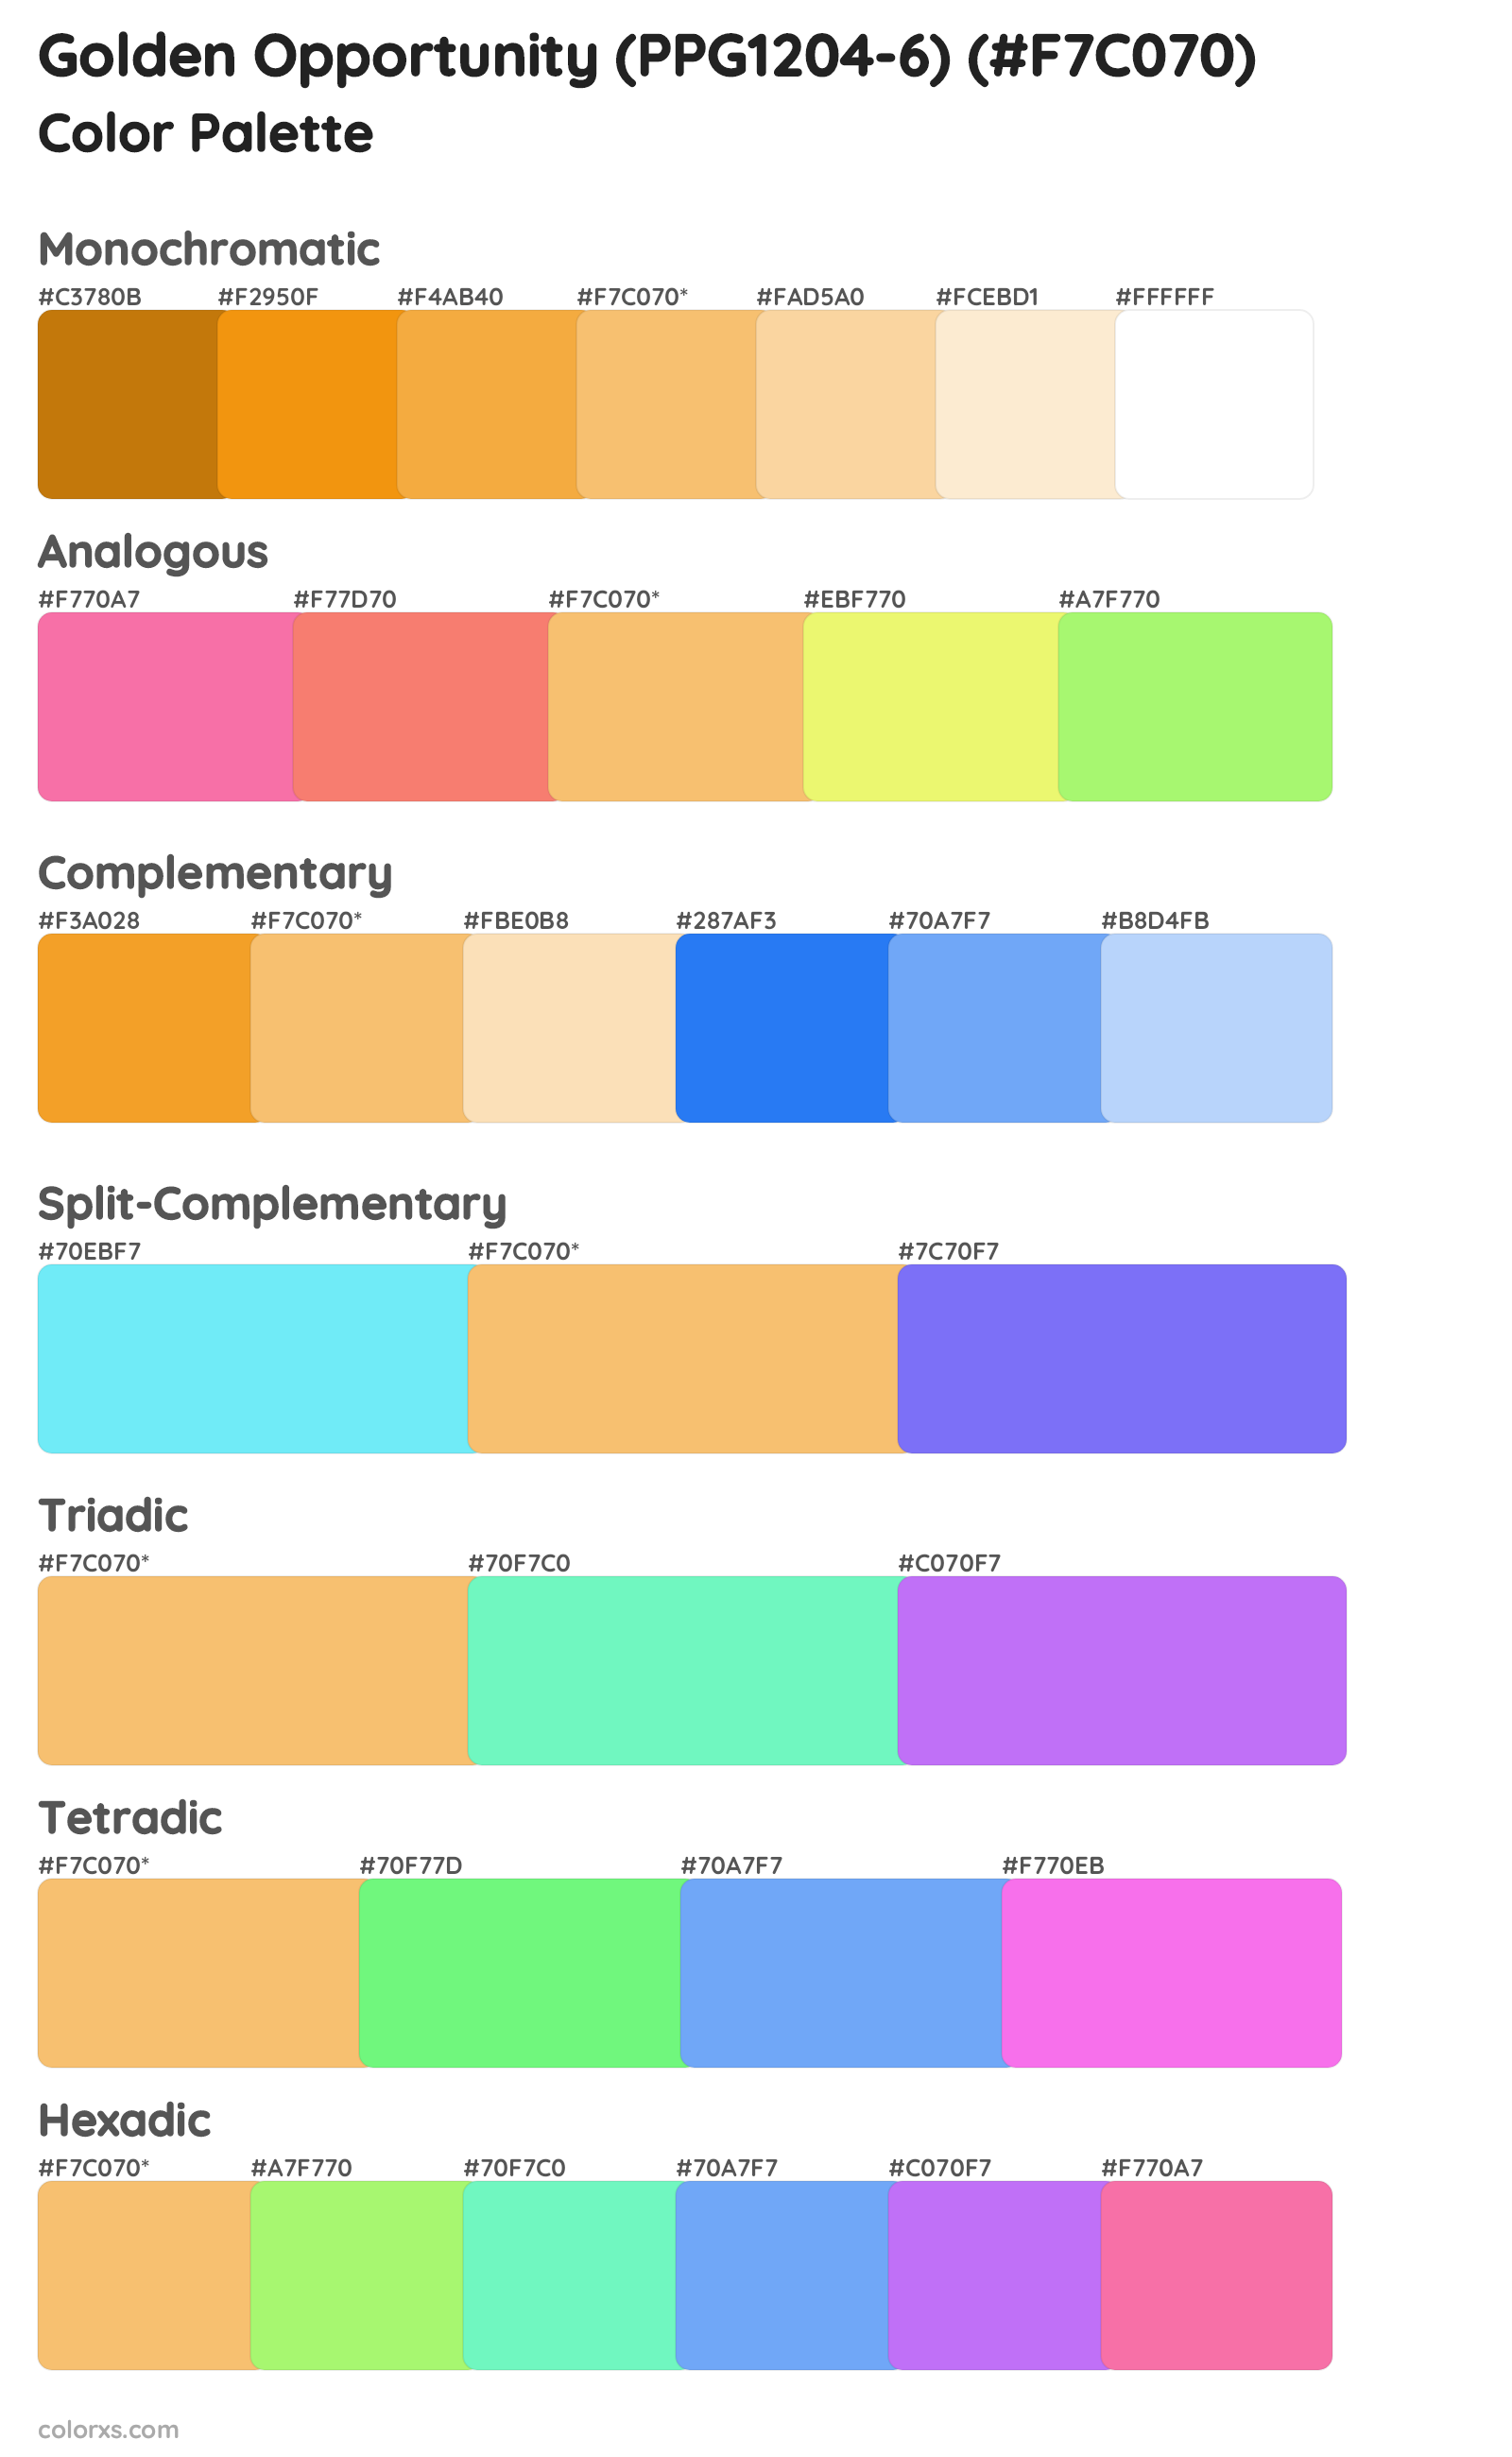 Golden Opportunity (PPG1204-6) Color Scheme Palettes